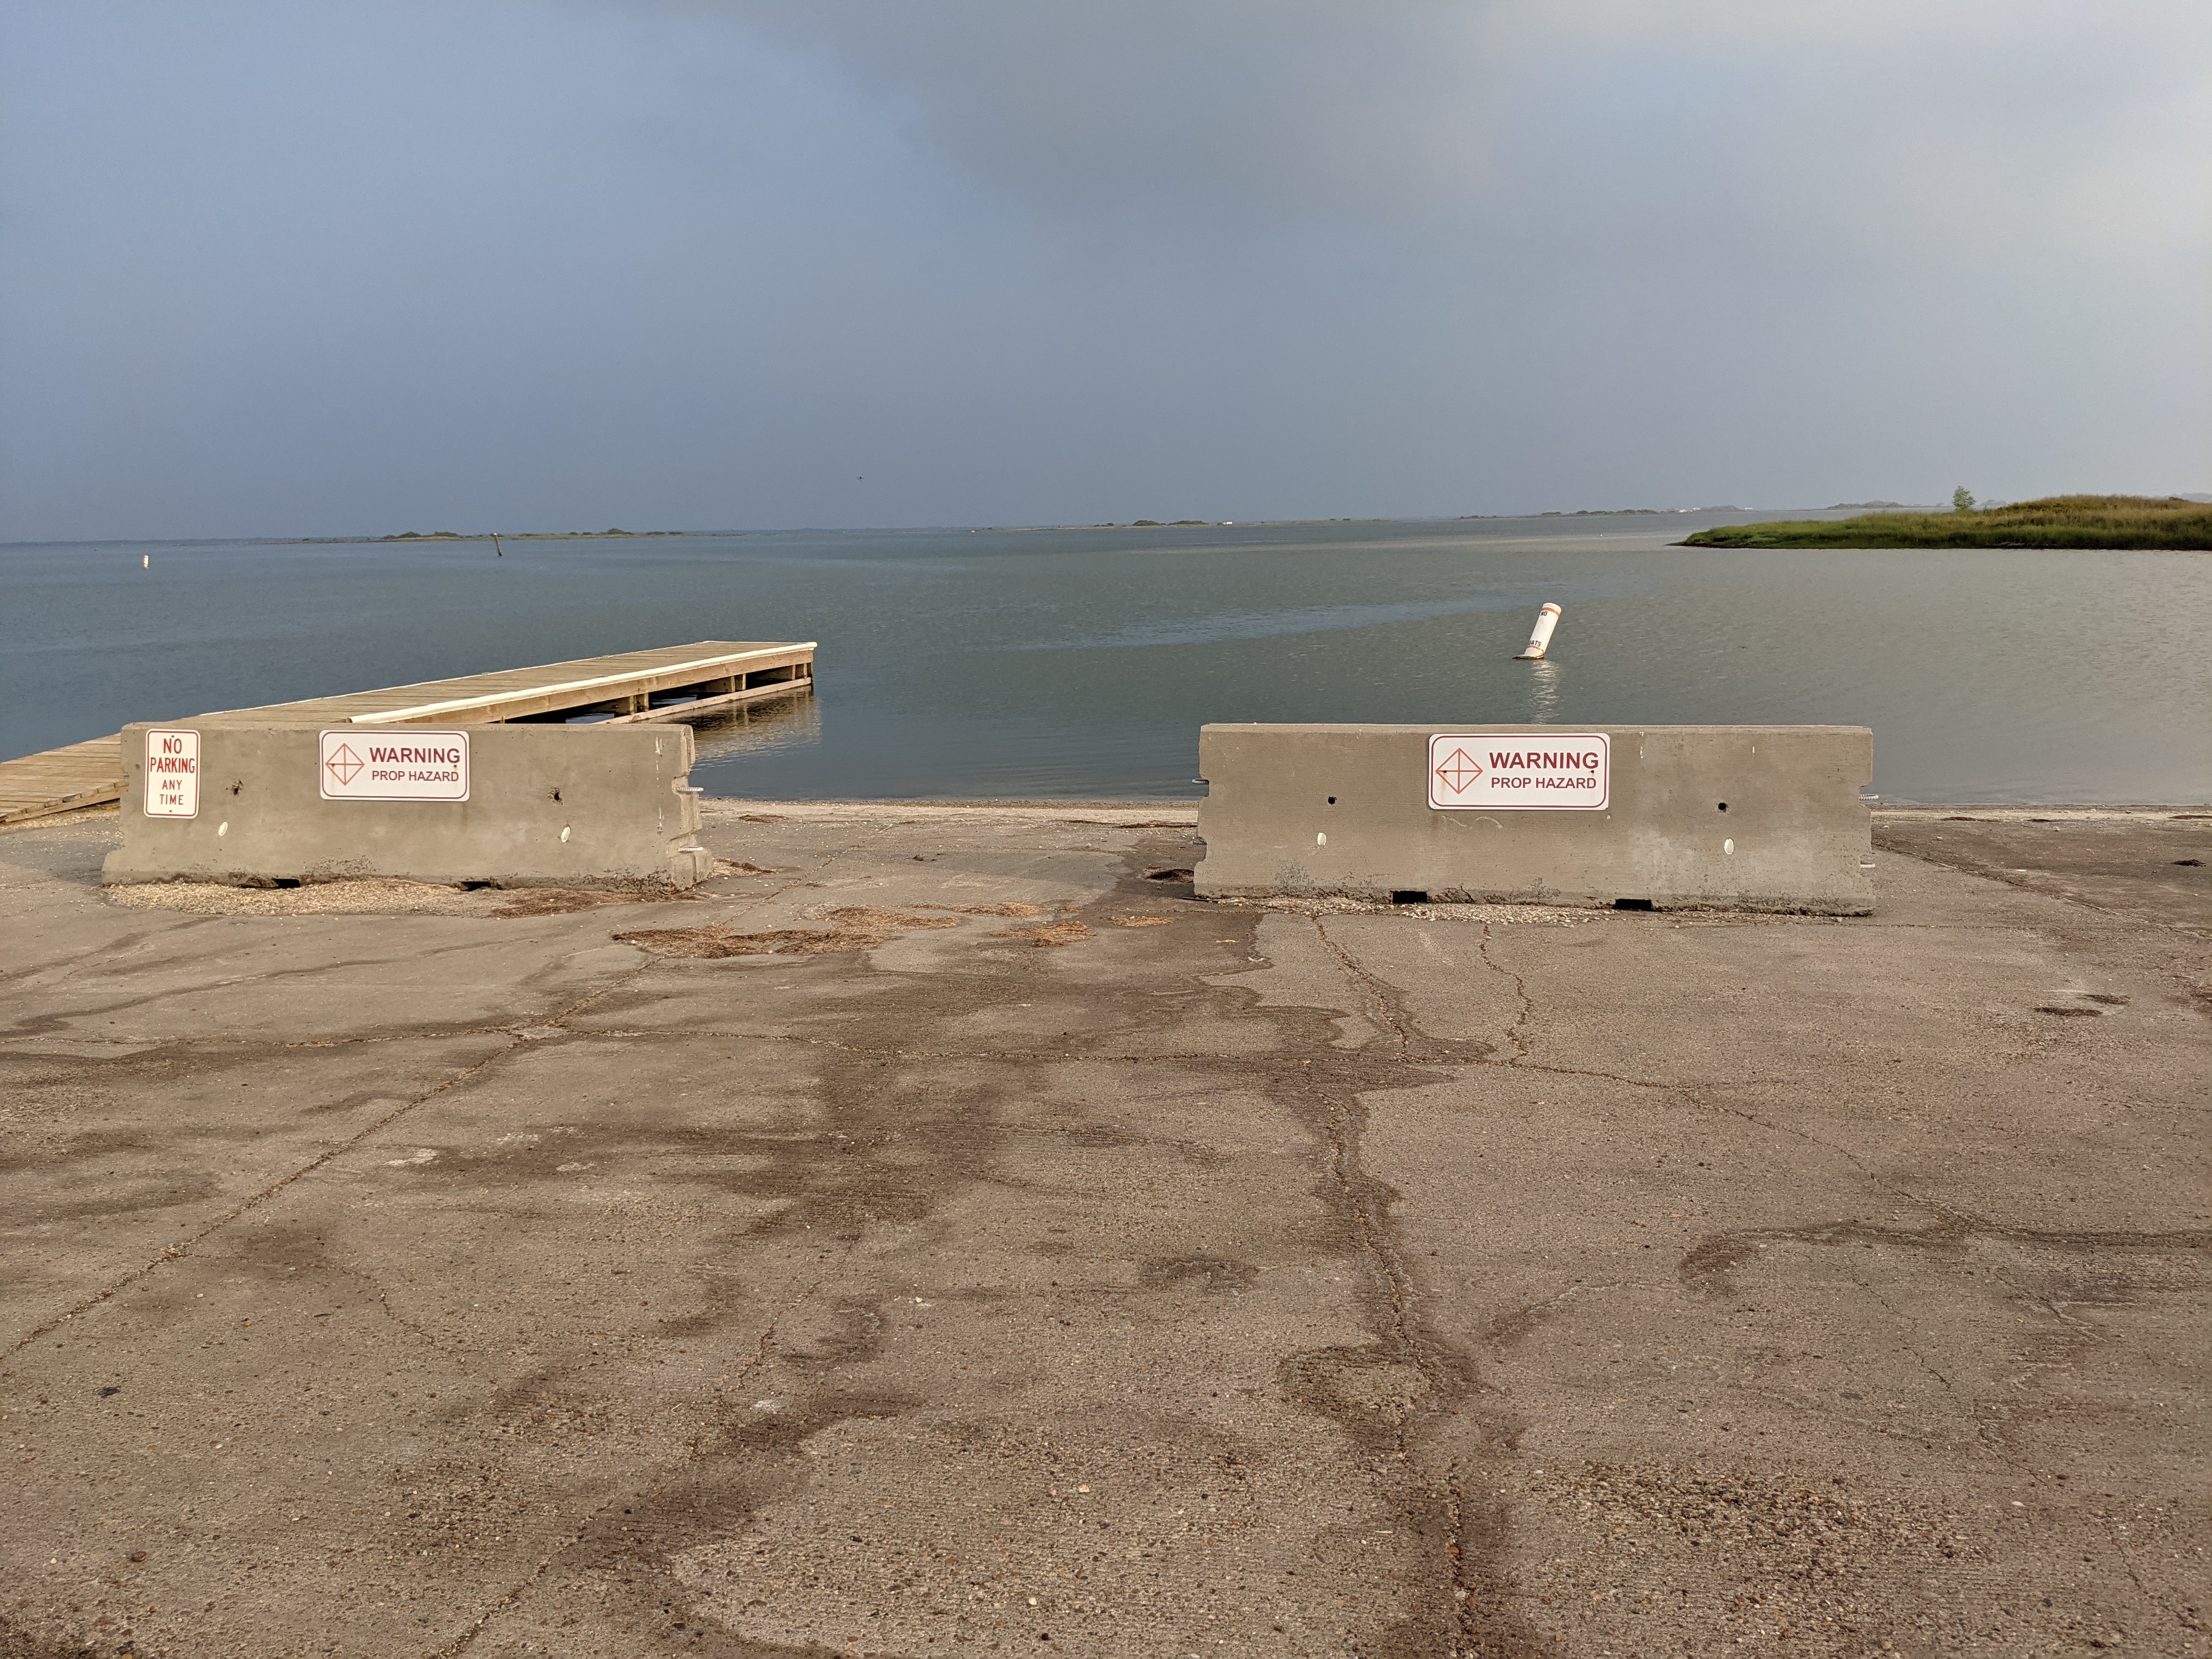 Concrete barricades block the entrance to the Bird Island Basin Boat Ramp